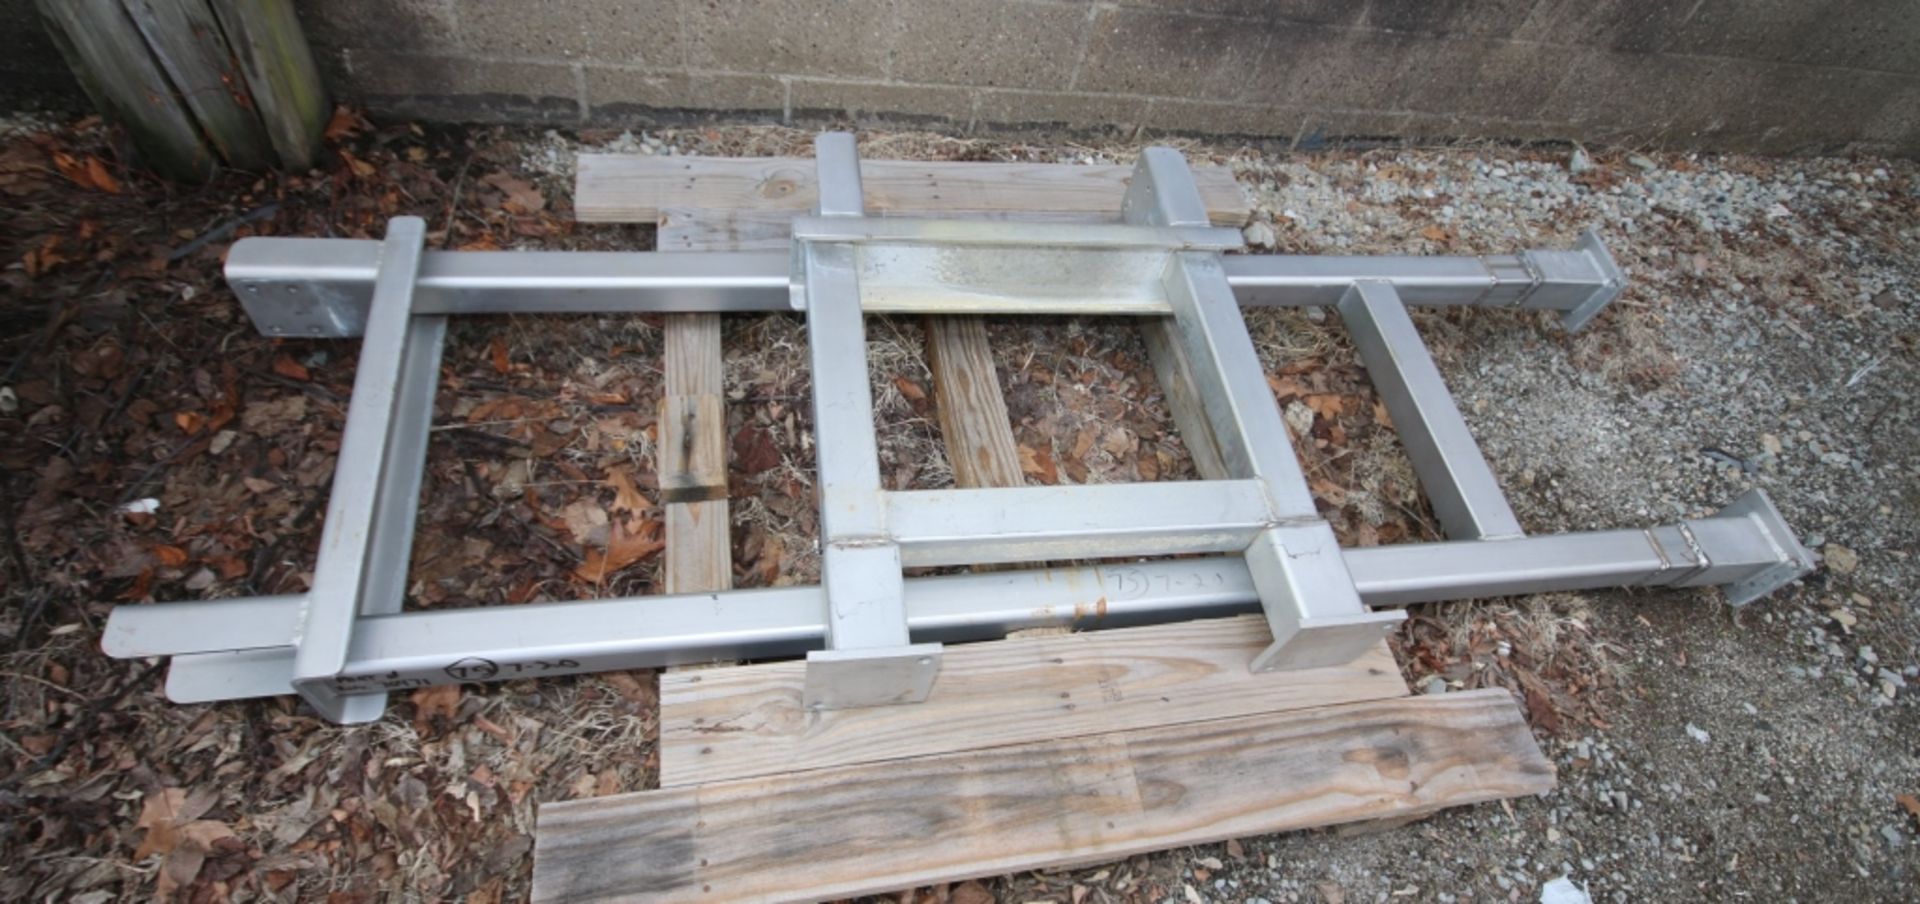 C & F Packing L Shaped S/S Conveyor Frame, SN 111-37, (2) Pcs Main Frames 6 ft & 5 ft Section 19" - Bild 3 aus 3